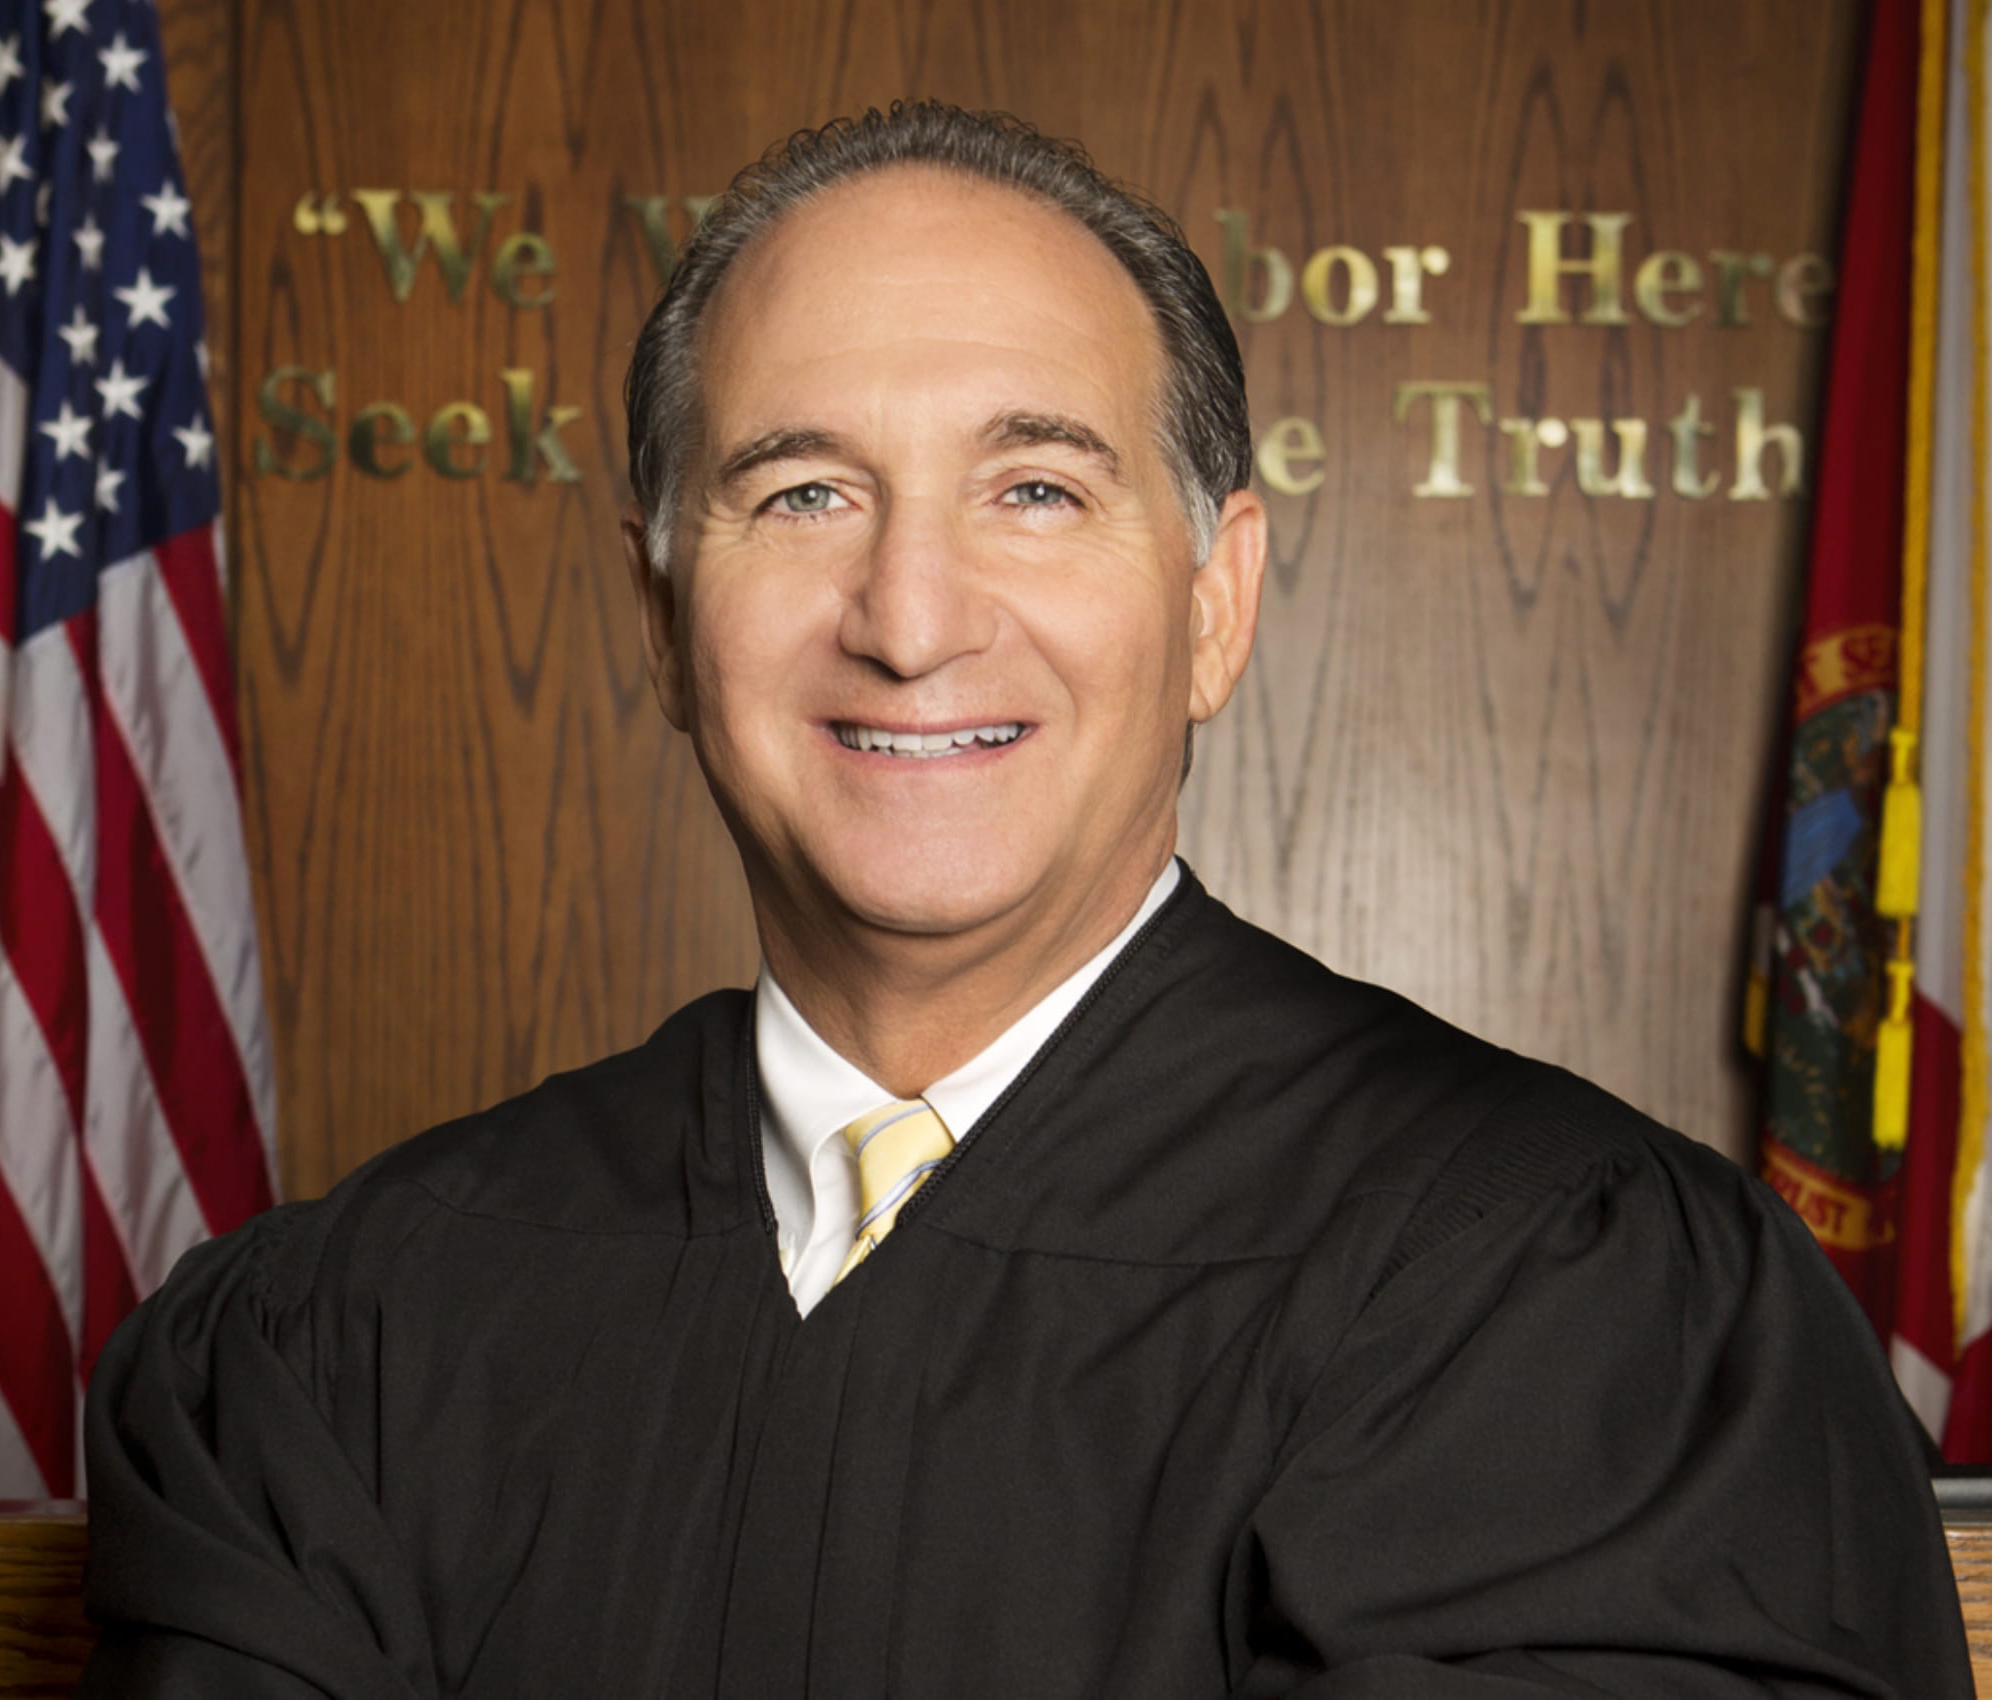 Judge Steven Leifman Leads the Way in Decriminalizing Mental Illness